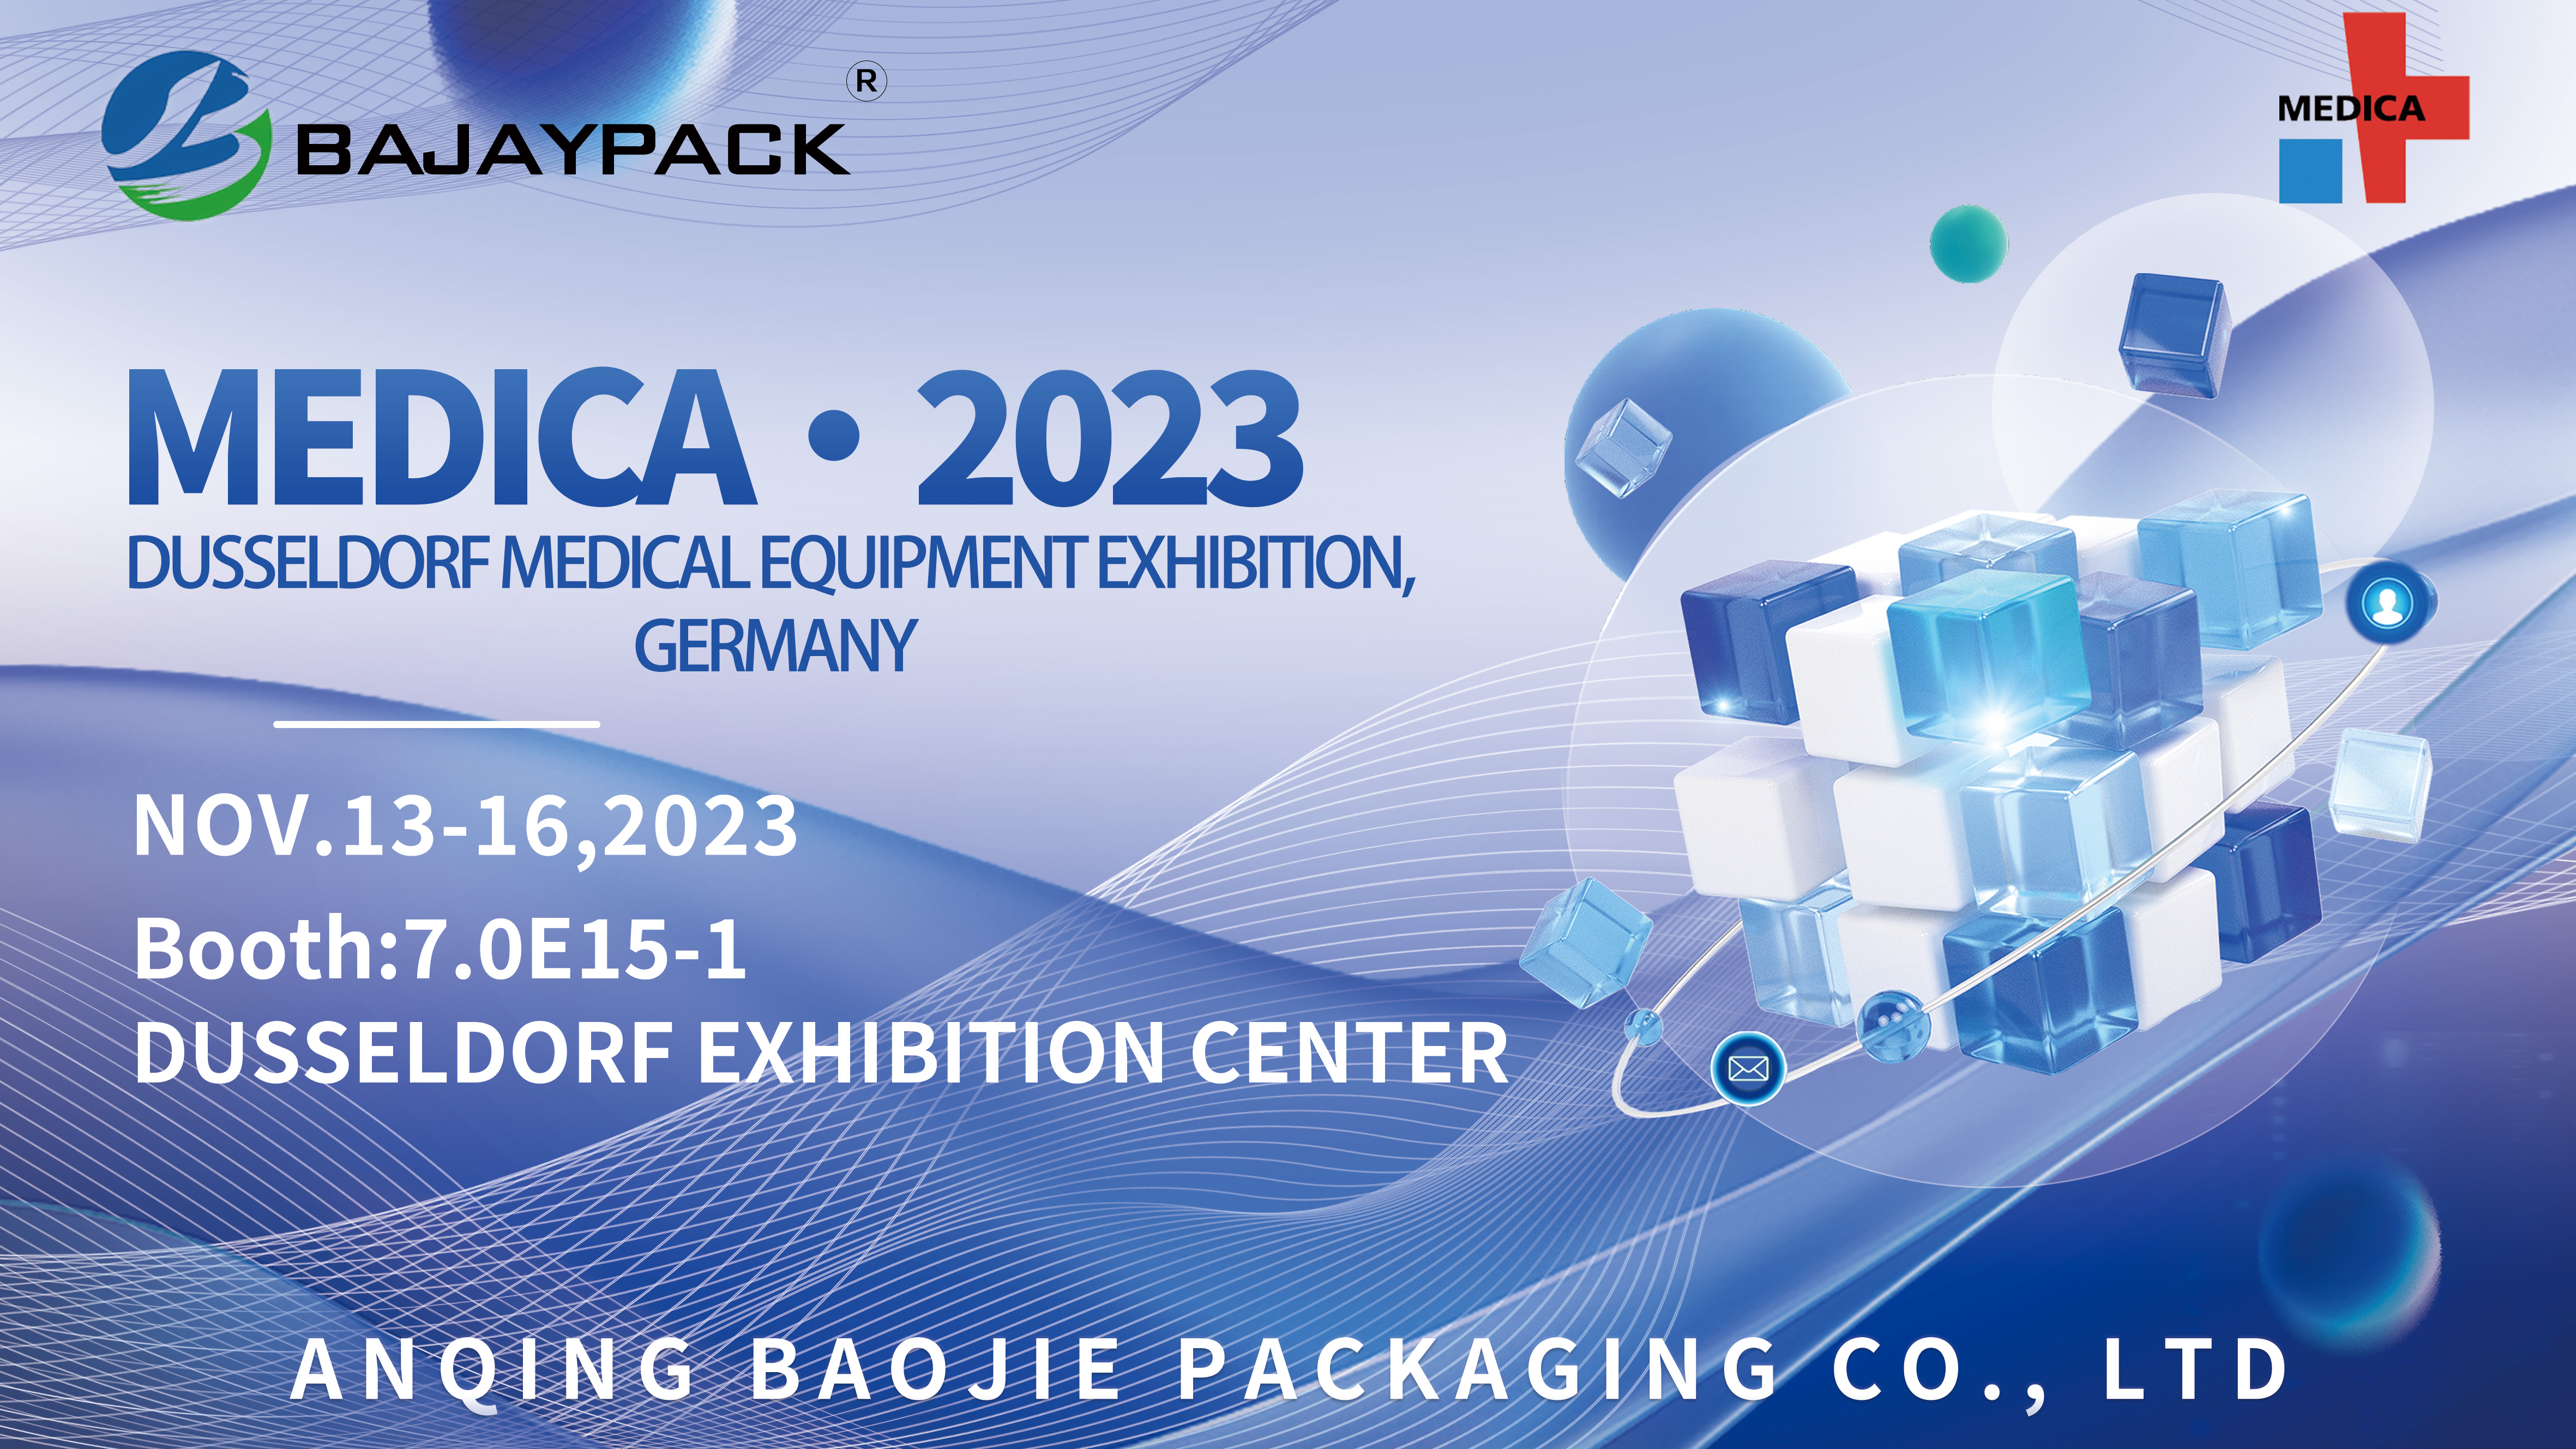 Dusseldorf Medical Equipment Exhibition, Germany 2023 MEDICA